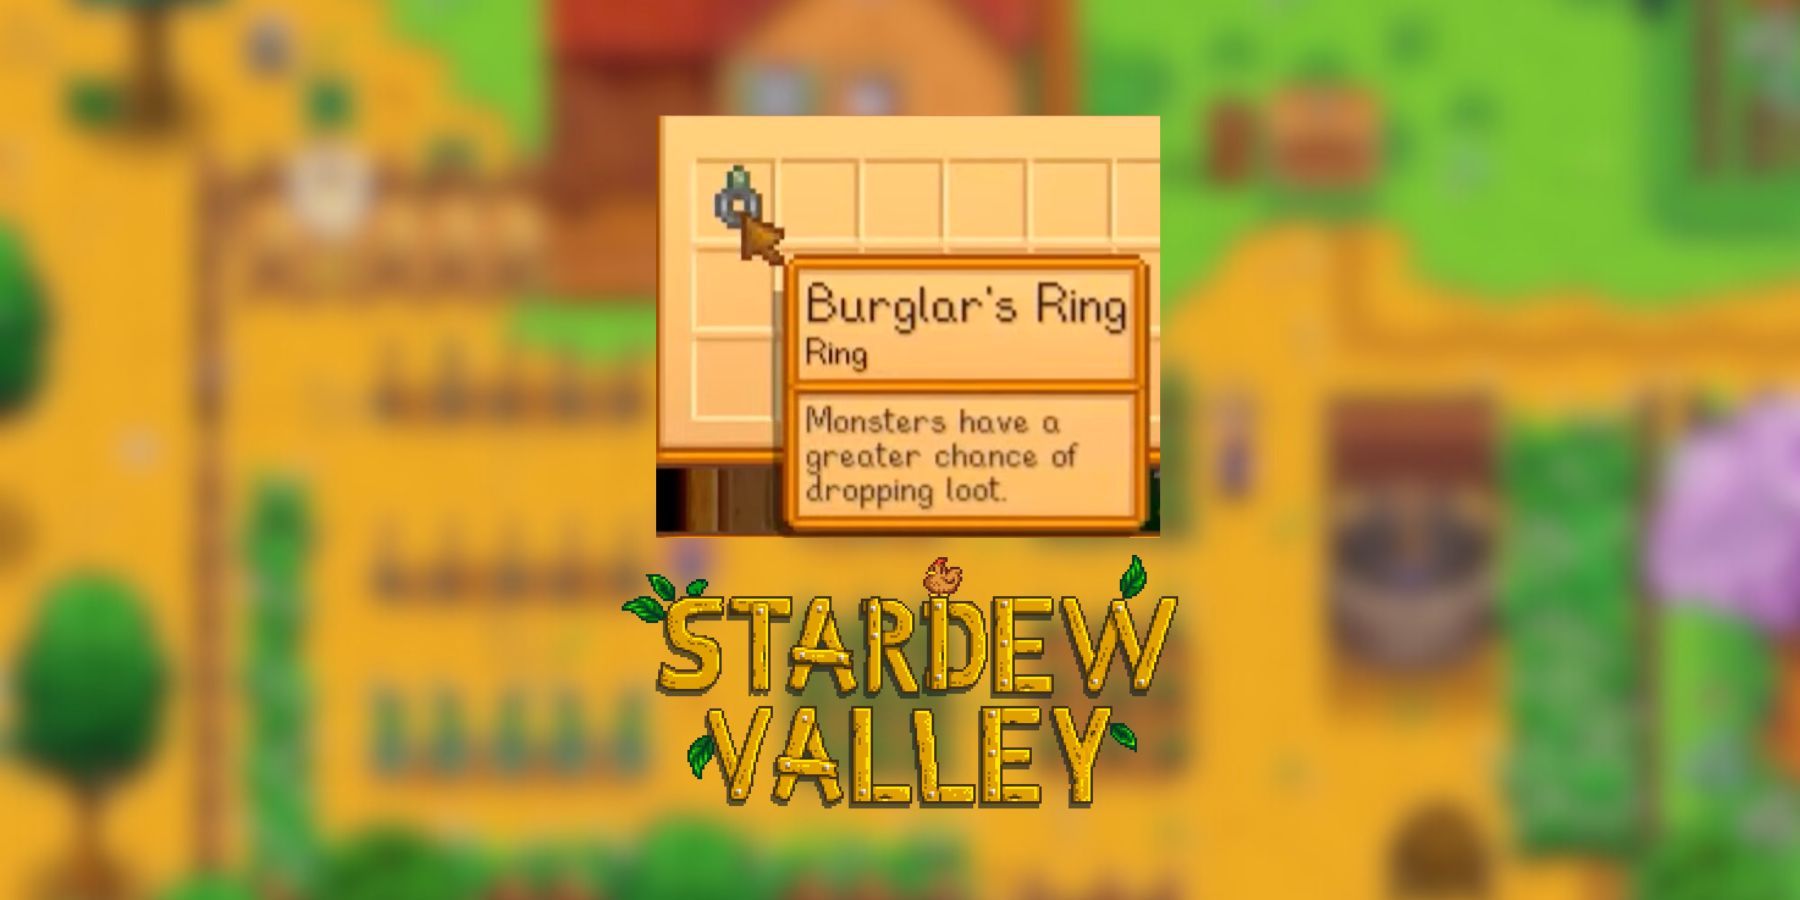 burglar's ring in stardew valley. 